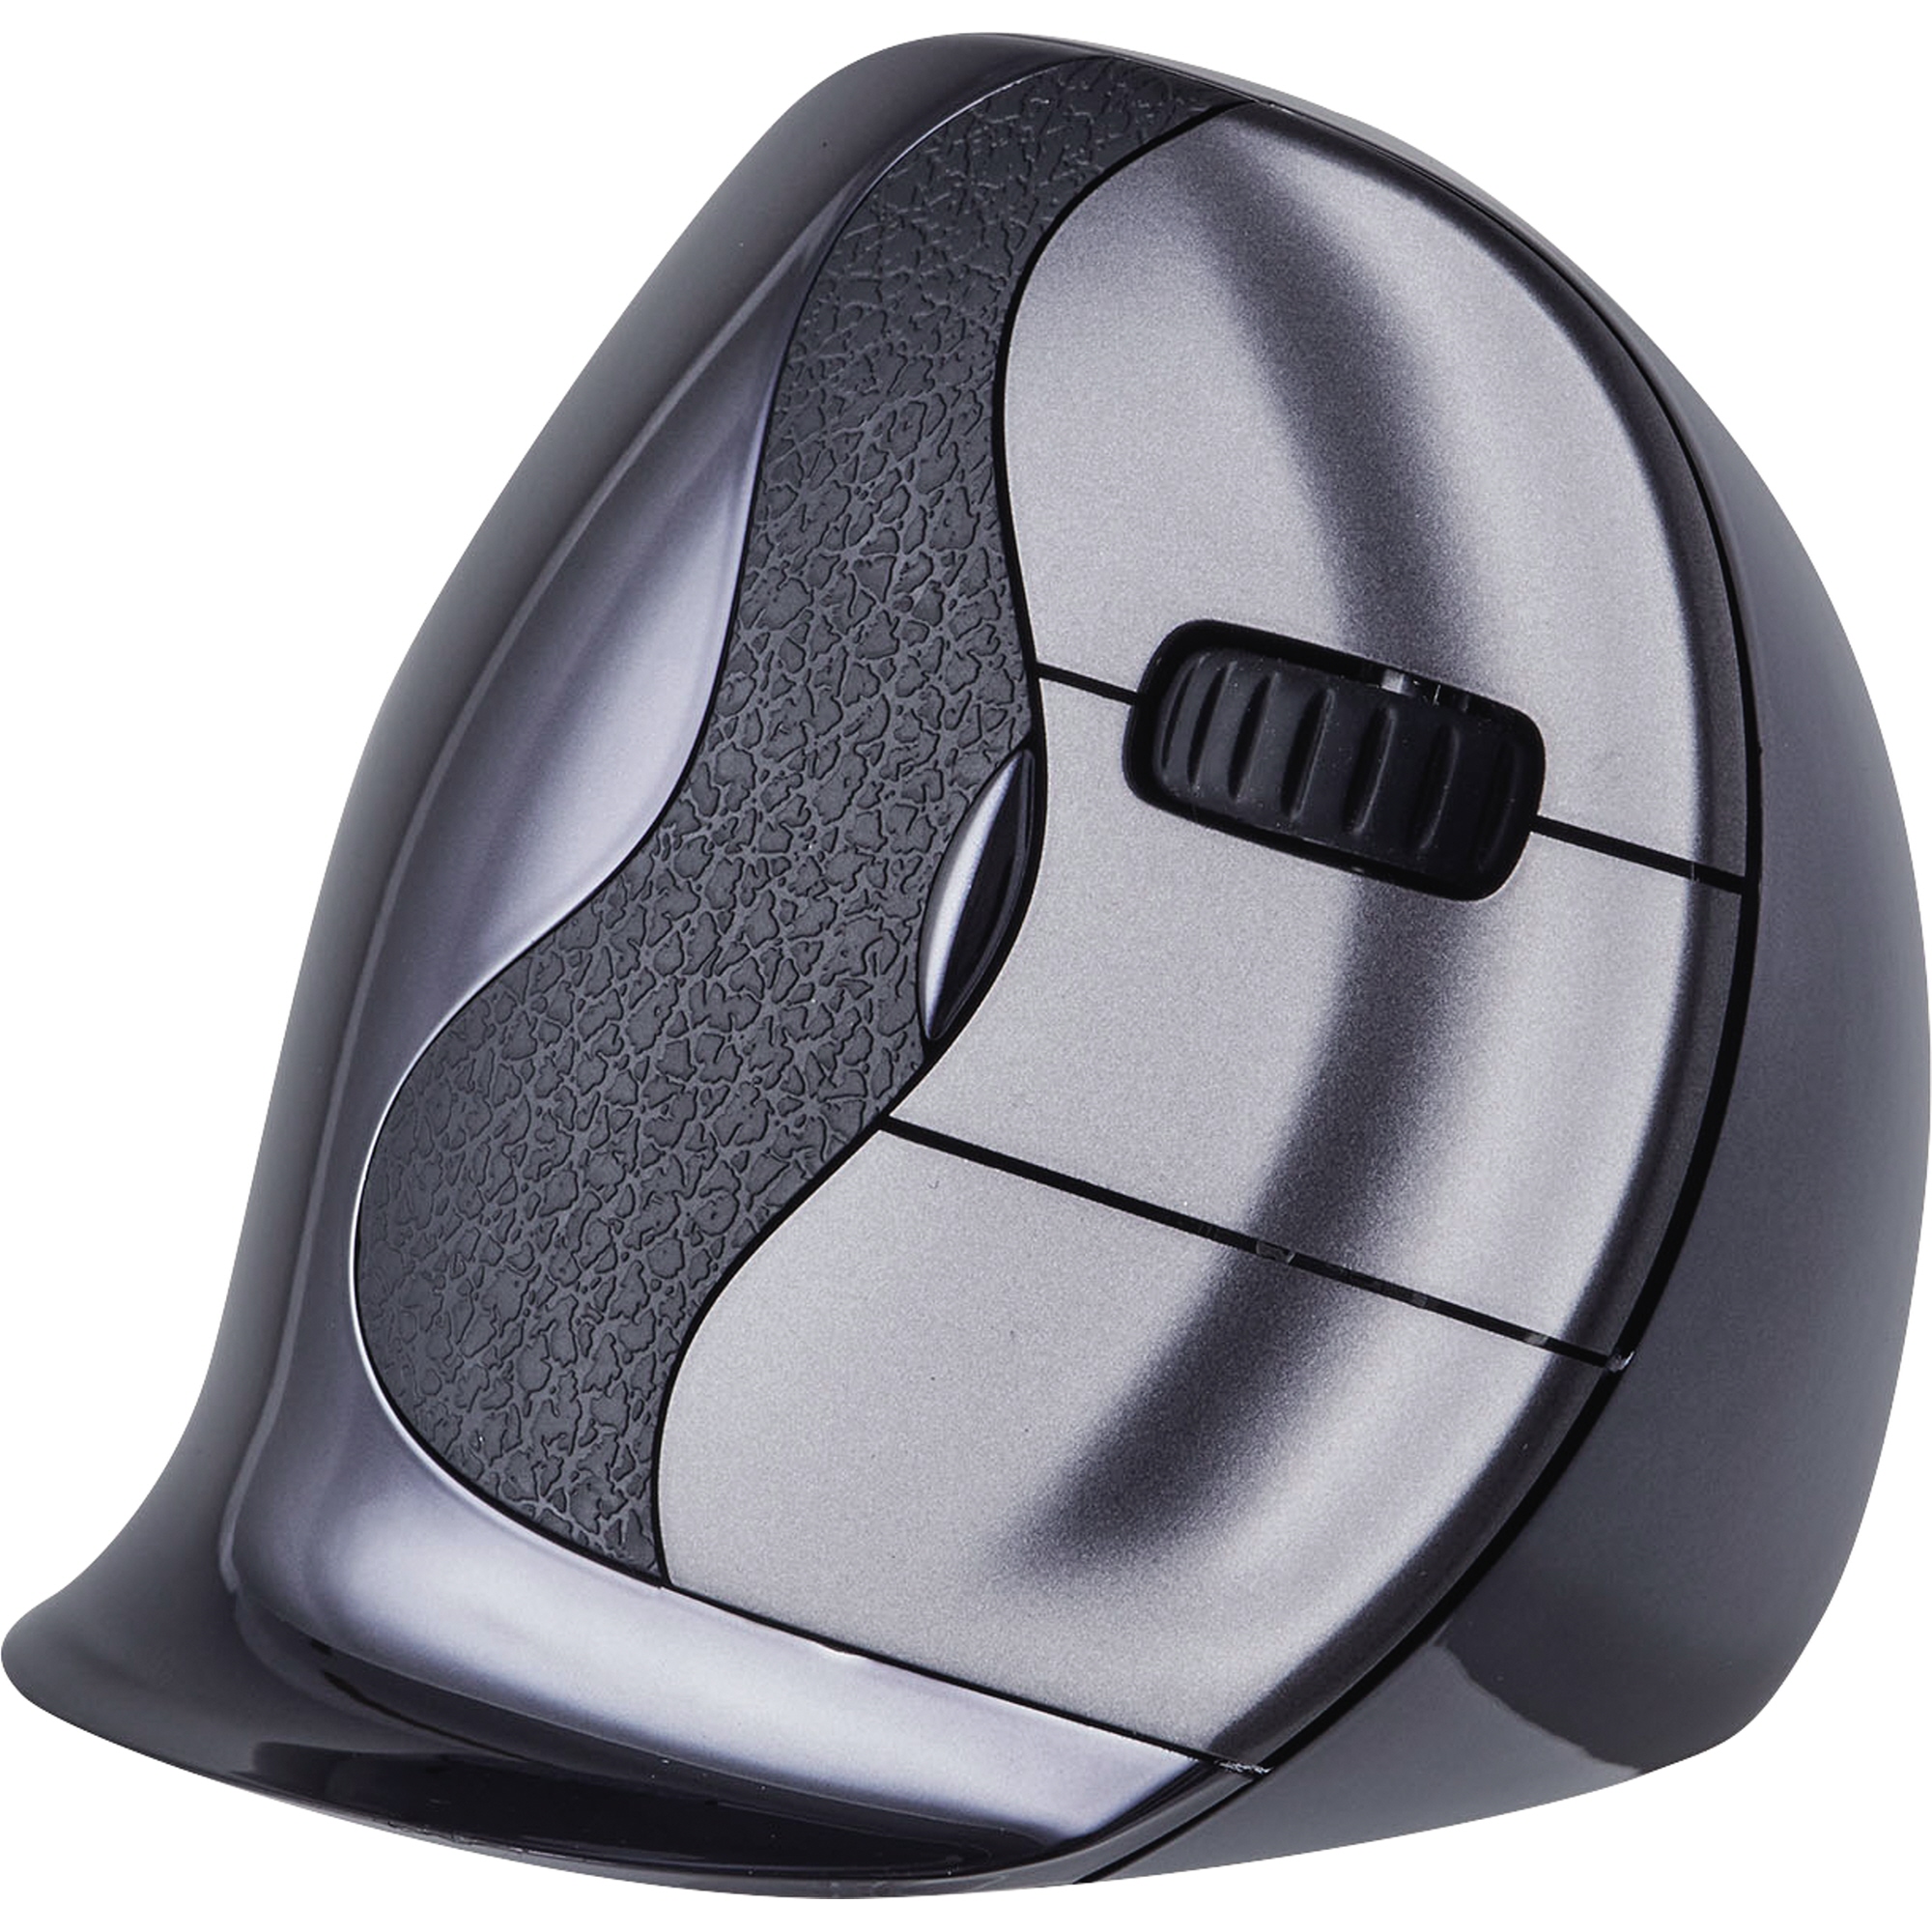 BakkerElkhuizen Optische PC Maus Evoluent D Wireless ergonomisch